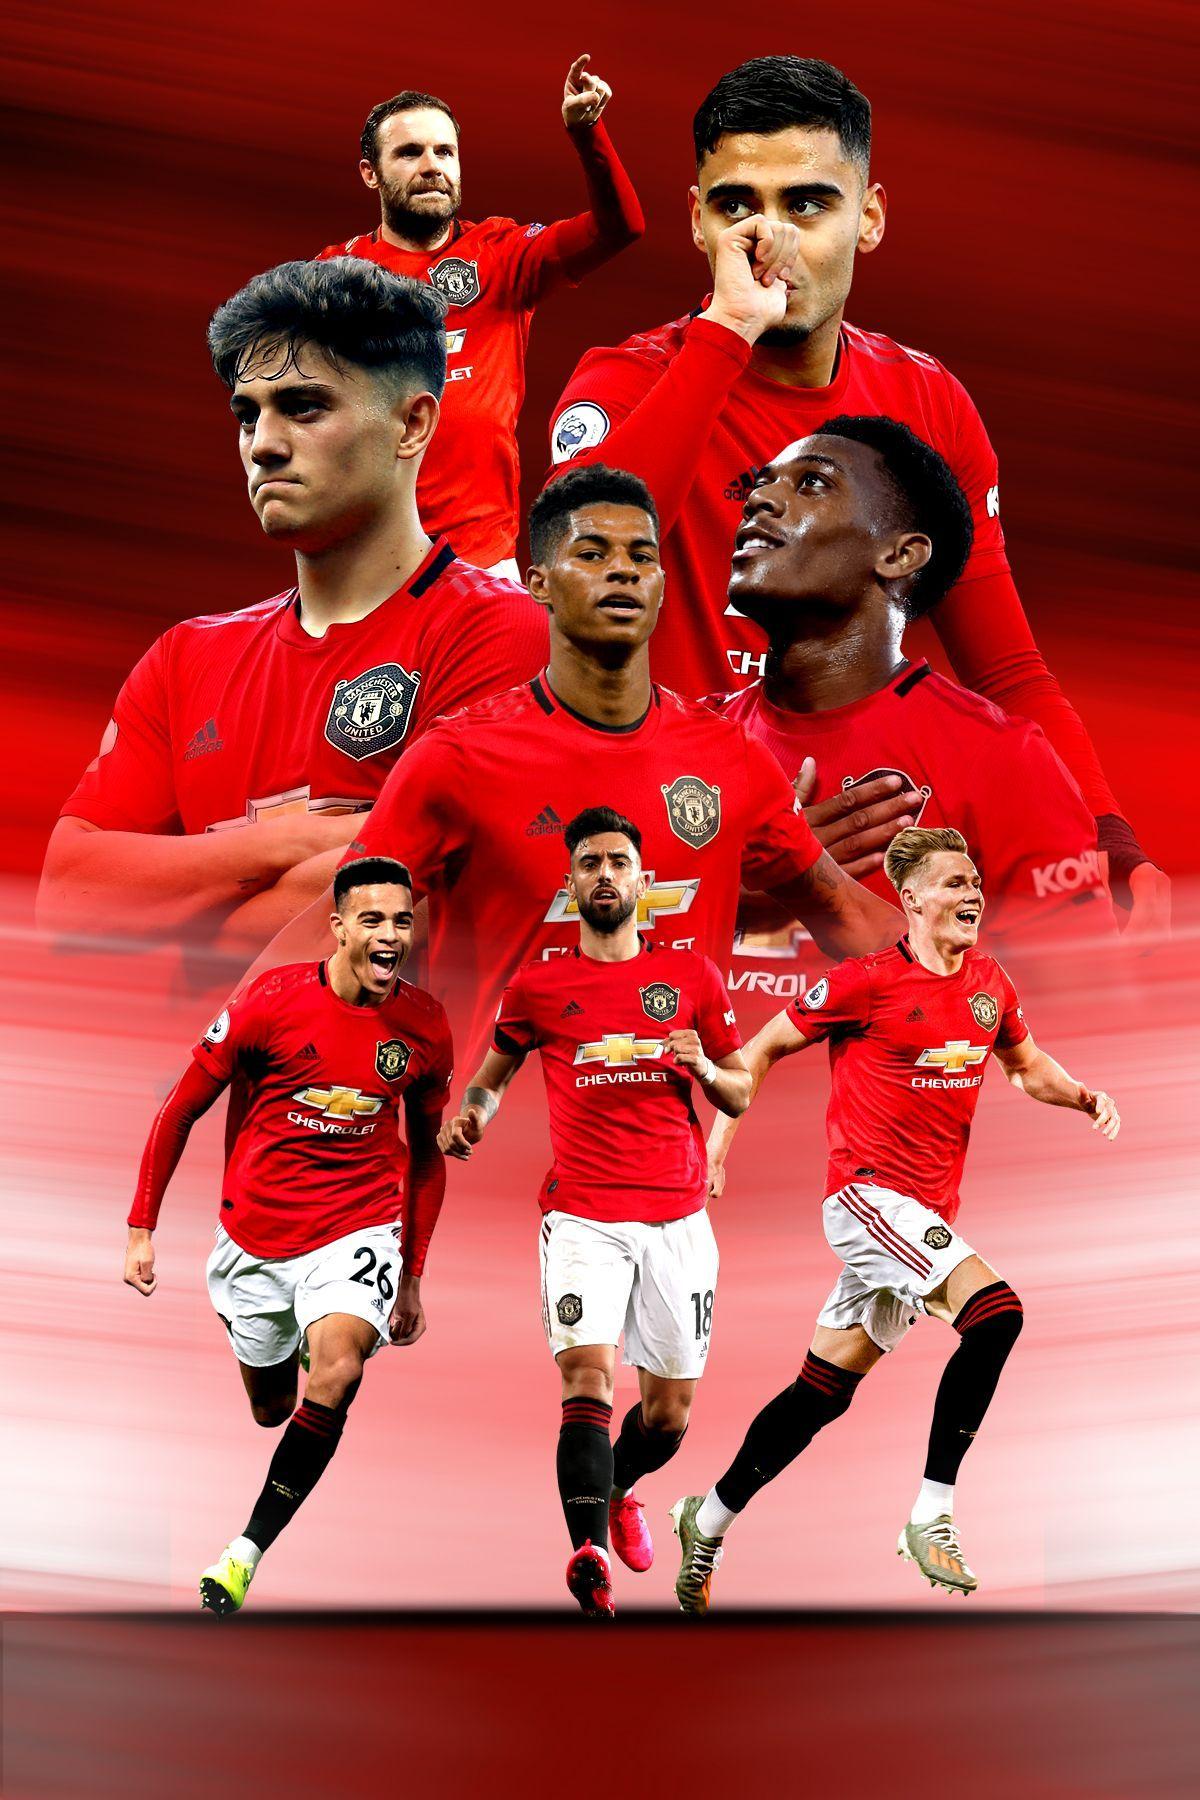 Manchester United Team Wallpaper 202215